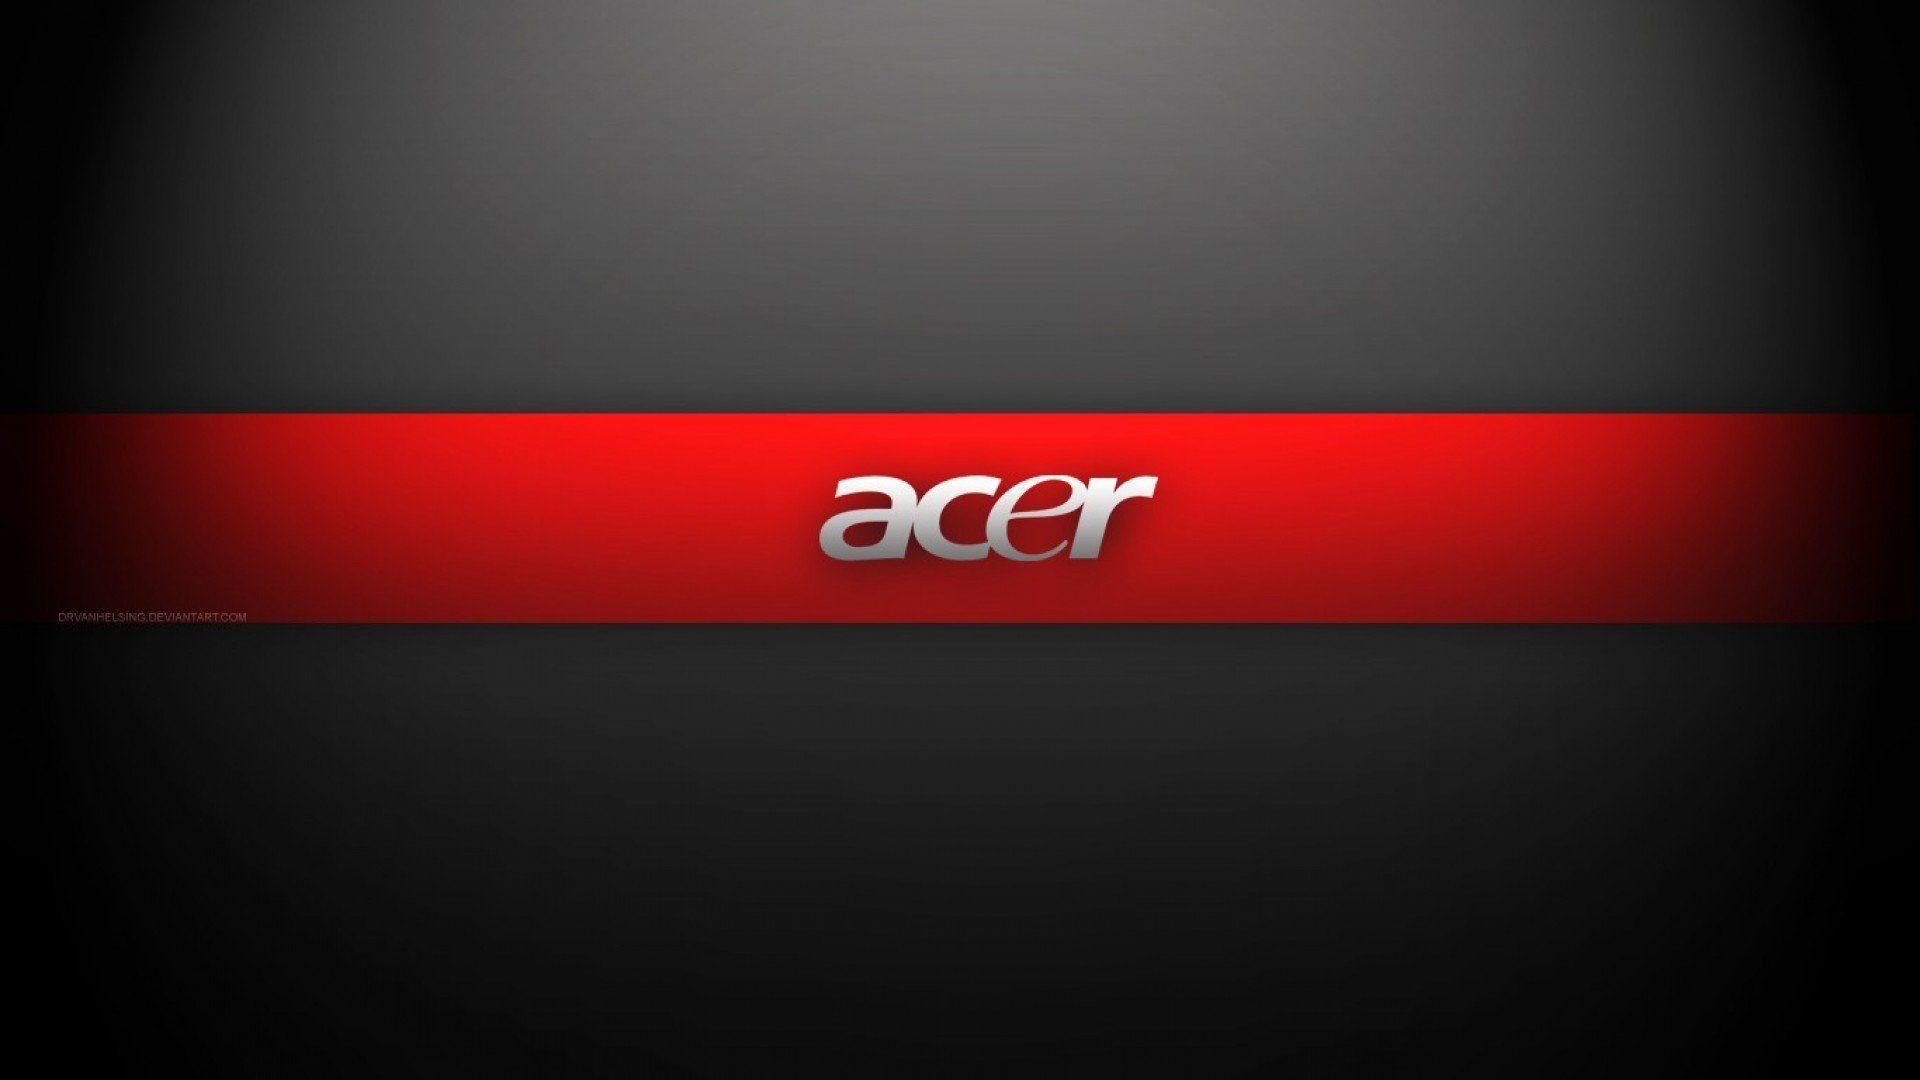 ACER ASPIRE PREDATOR GAMING desktop computer wallpaperx1080